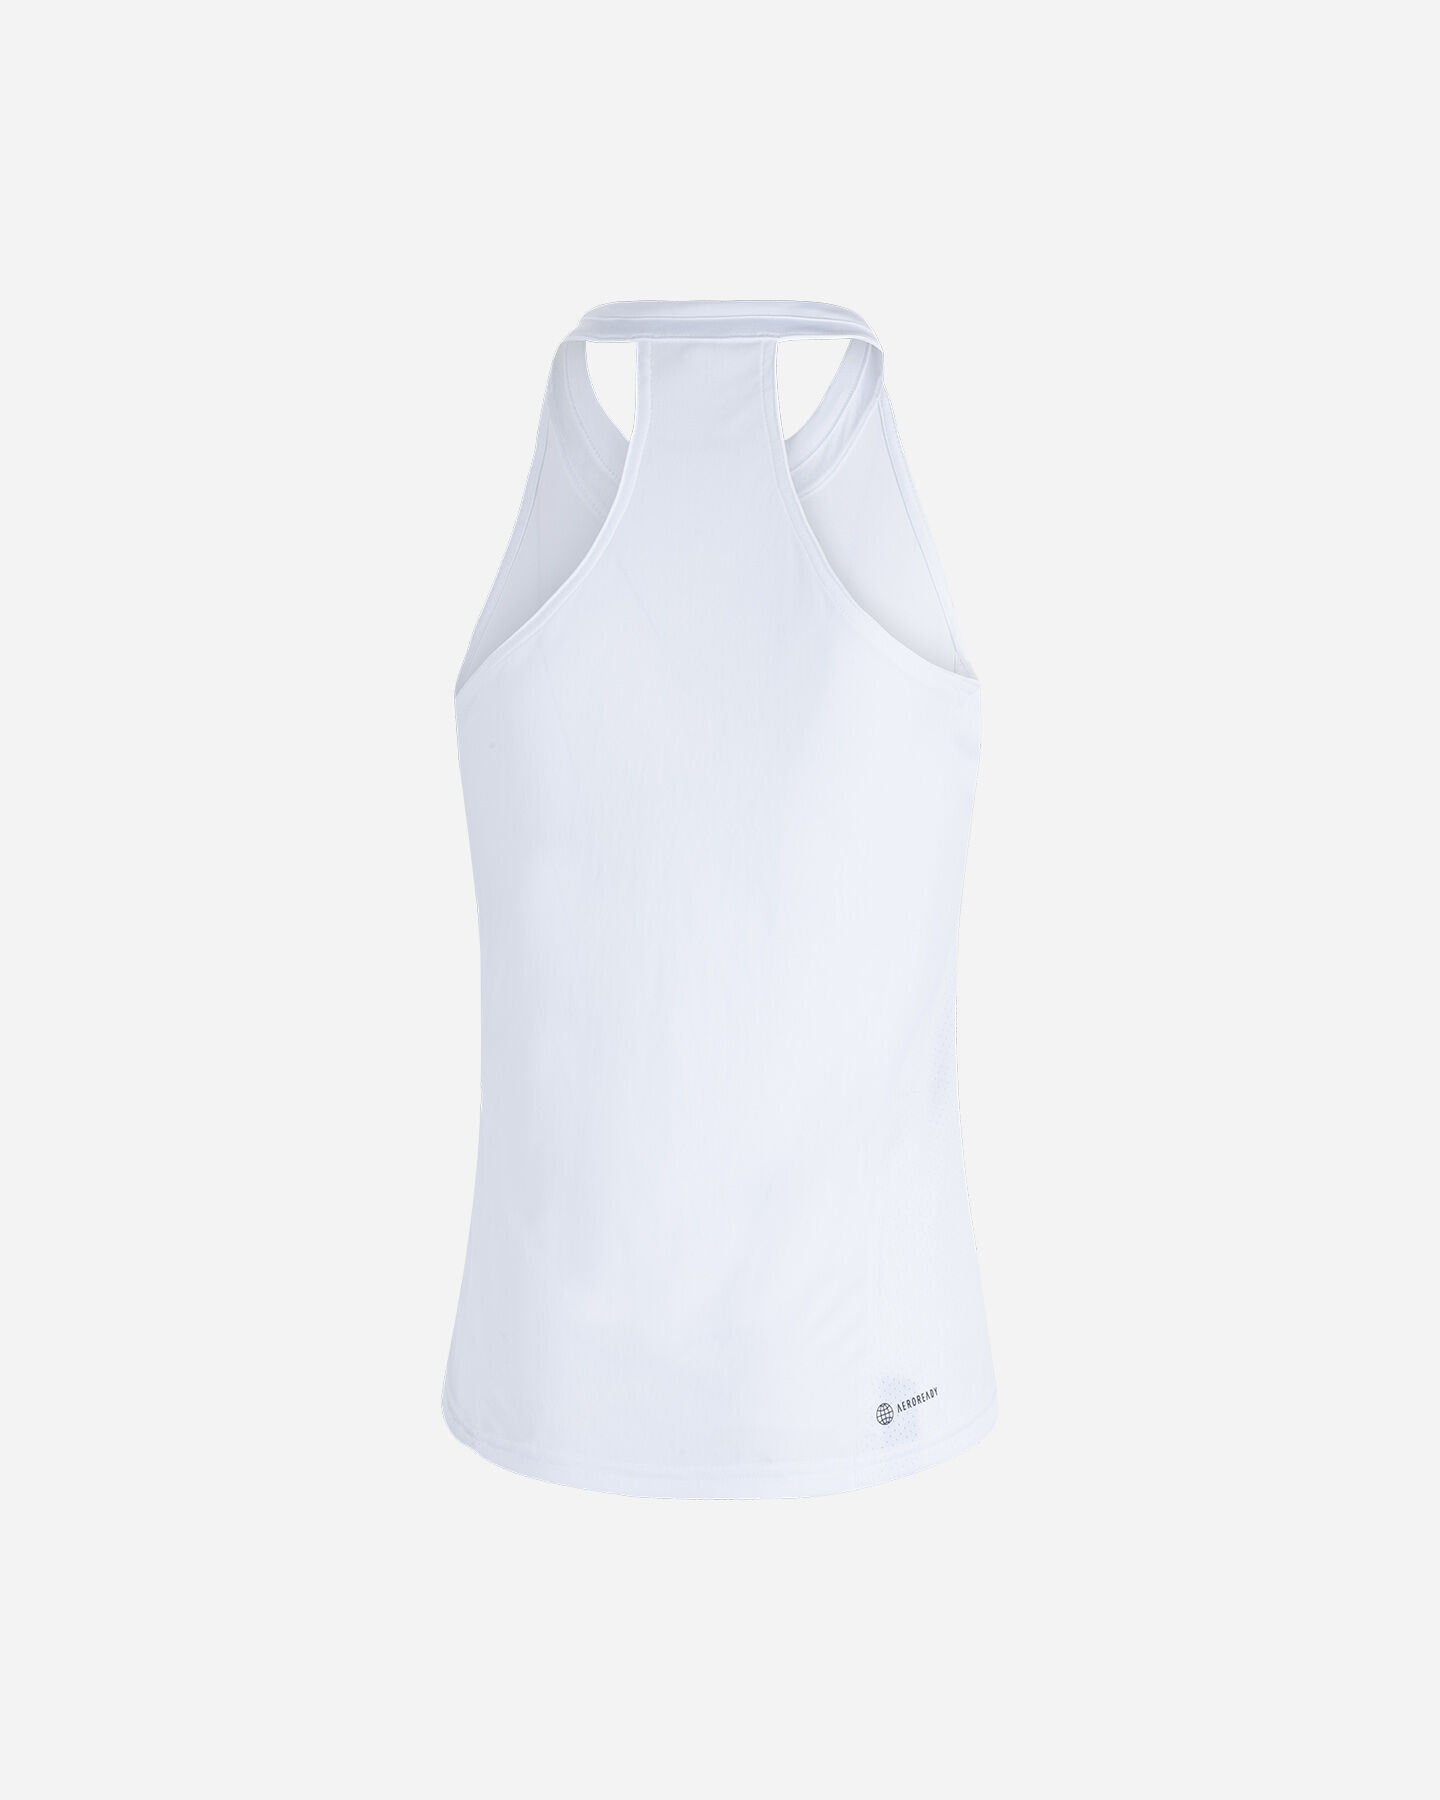  T-Shirt tennis ADIDAS CLUB W S5448787|UNI|L scatto 1